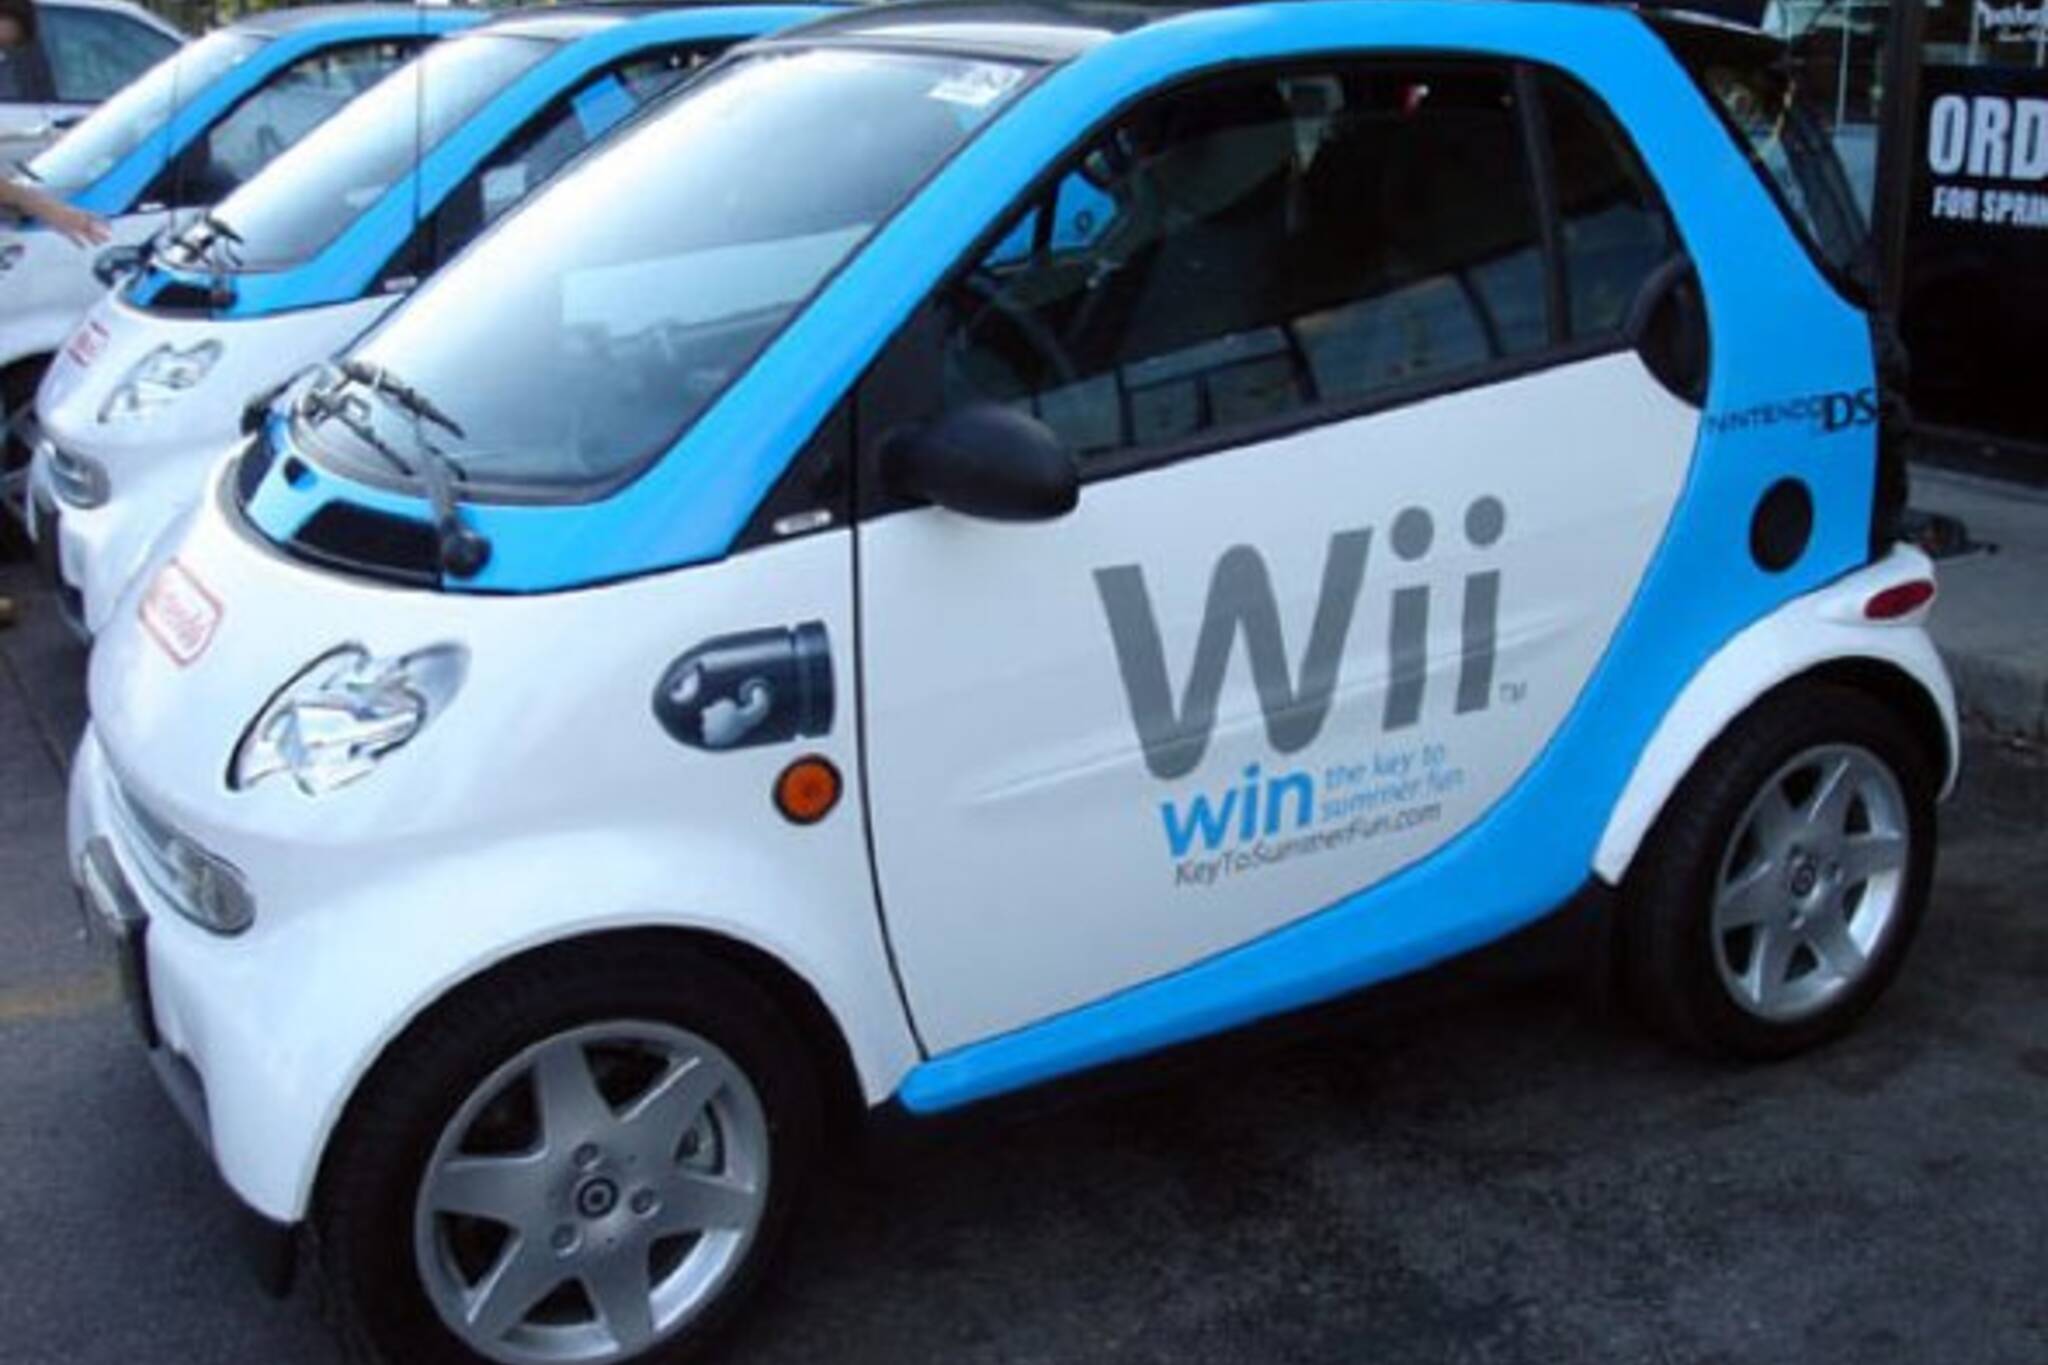 September Hopefully elbow Toronto Gets Wii on Wheels